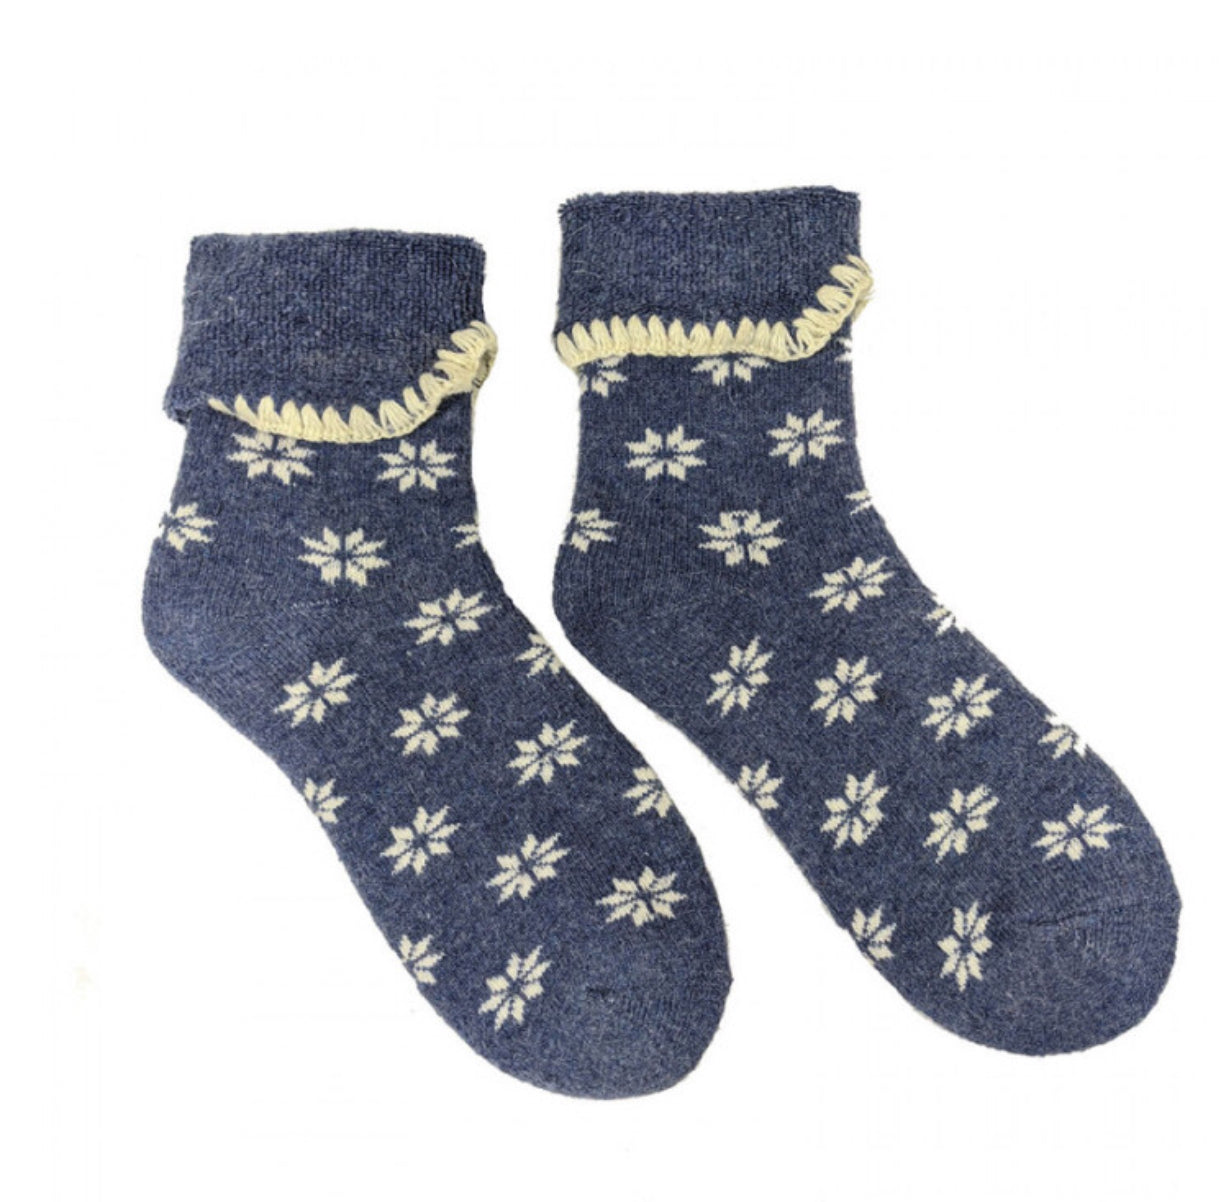 Snowflake cuffed socks